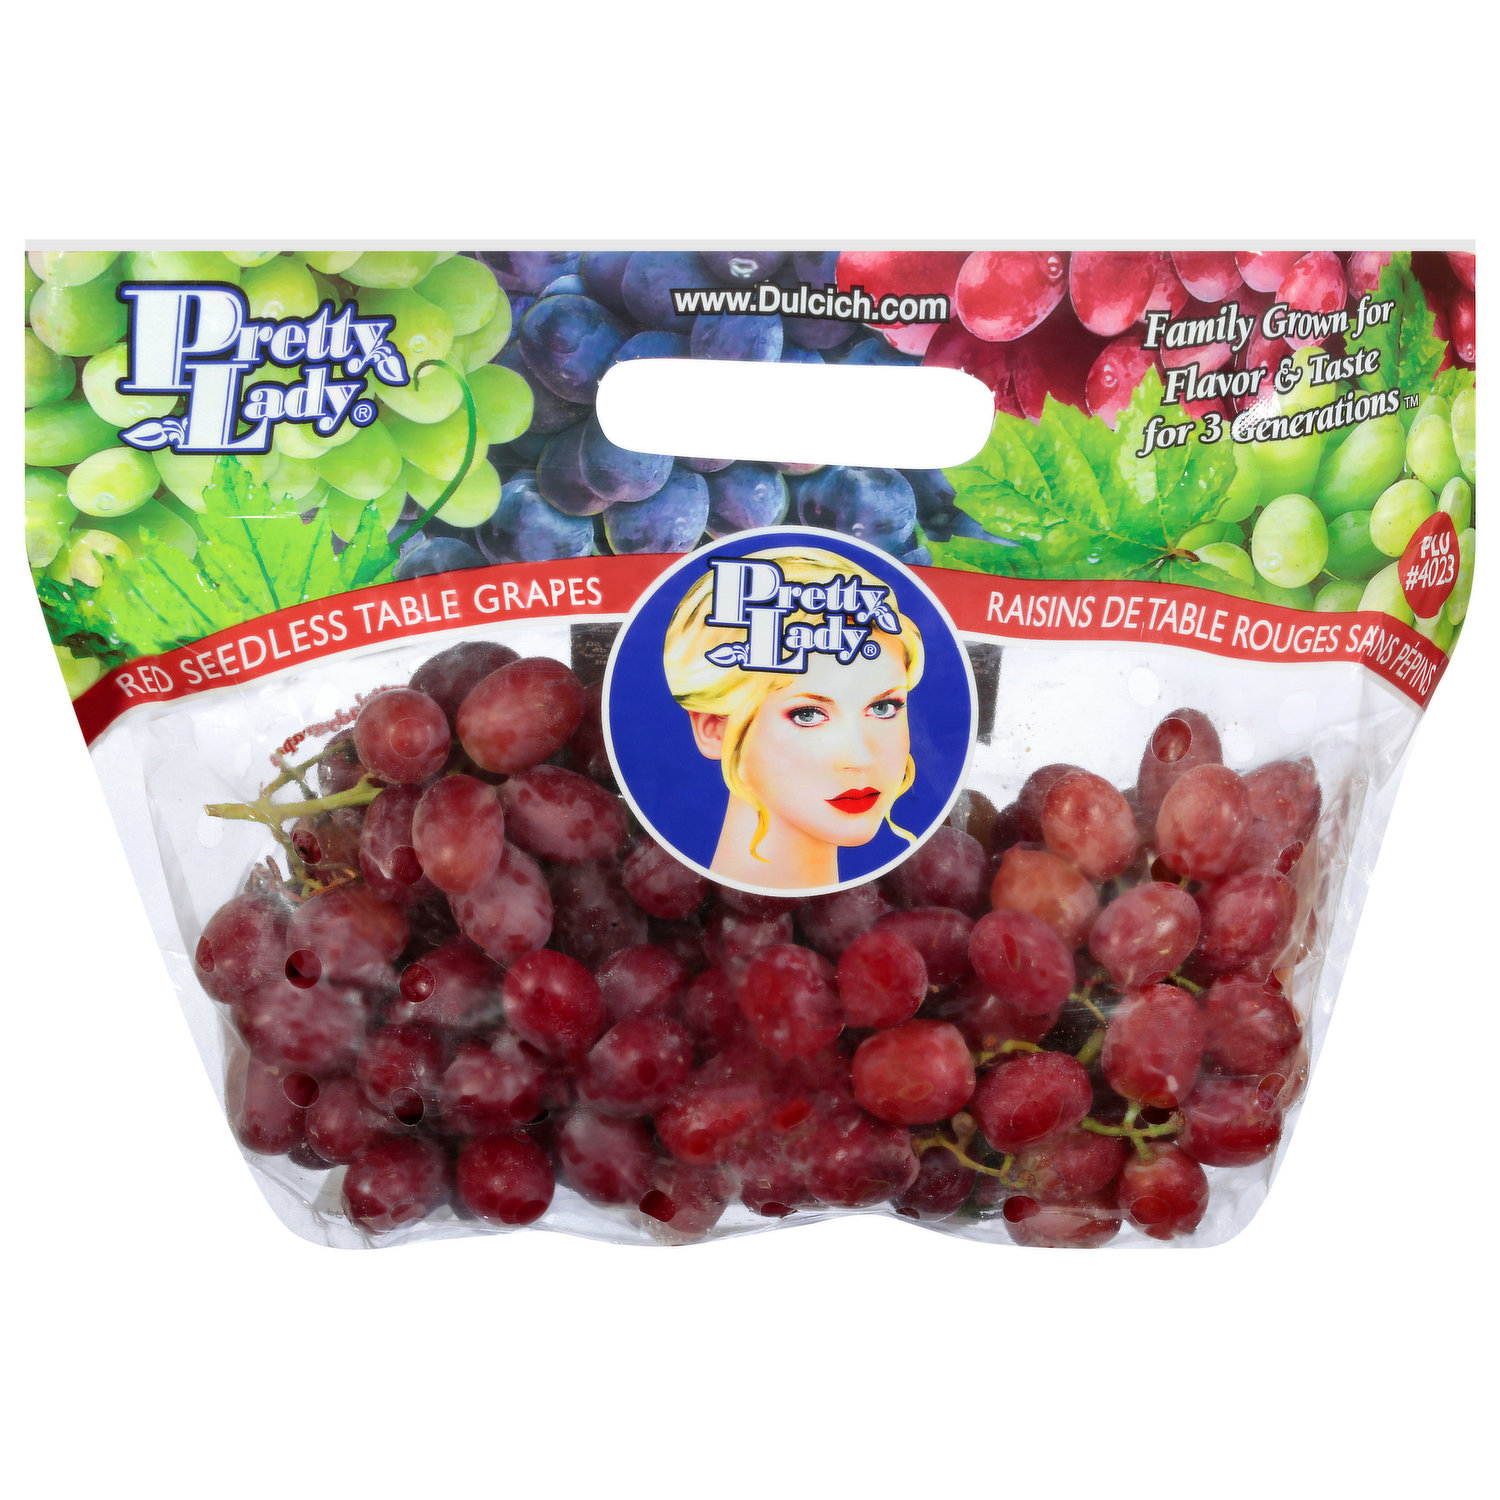 GRARED18#FL | Red Seedless Grape (18#)